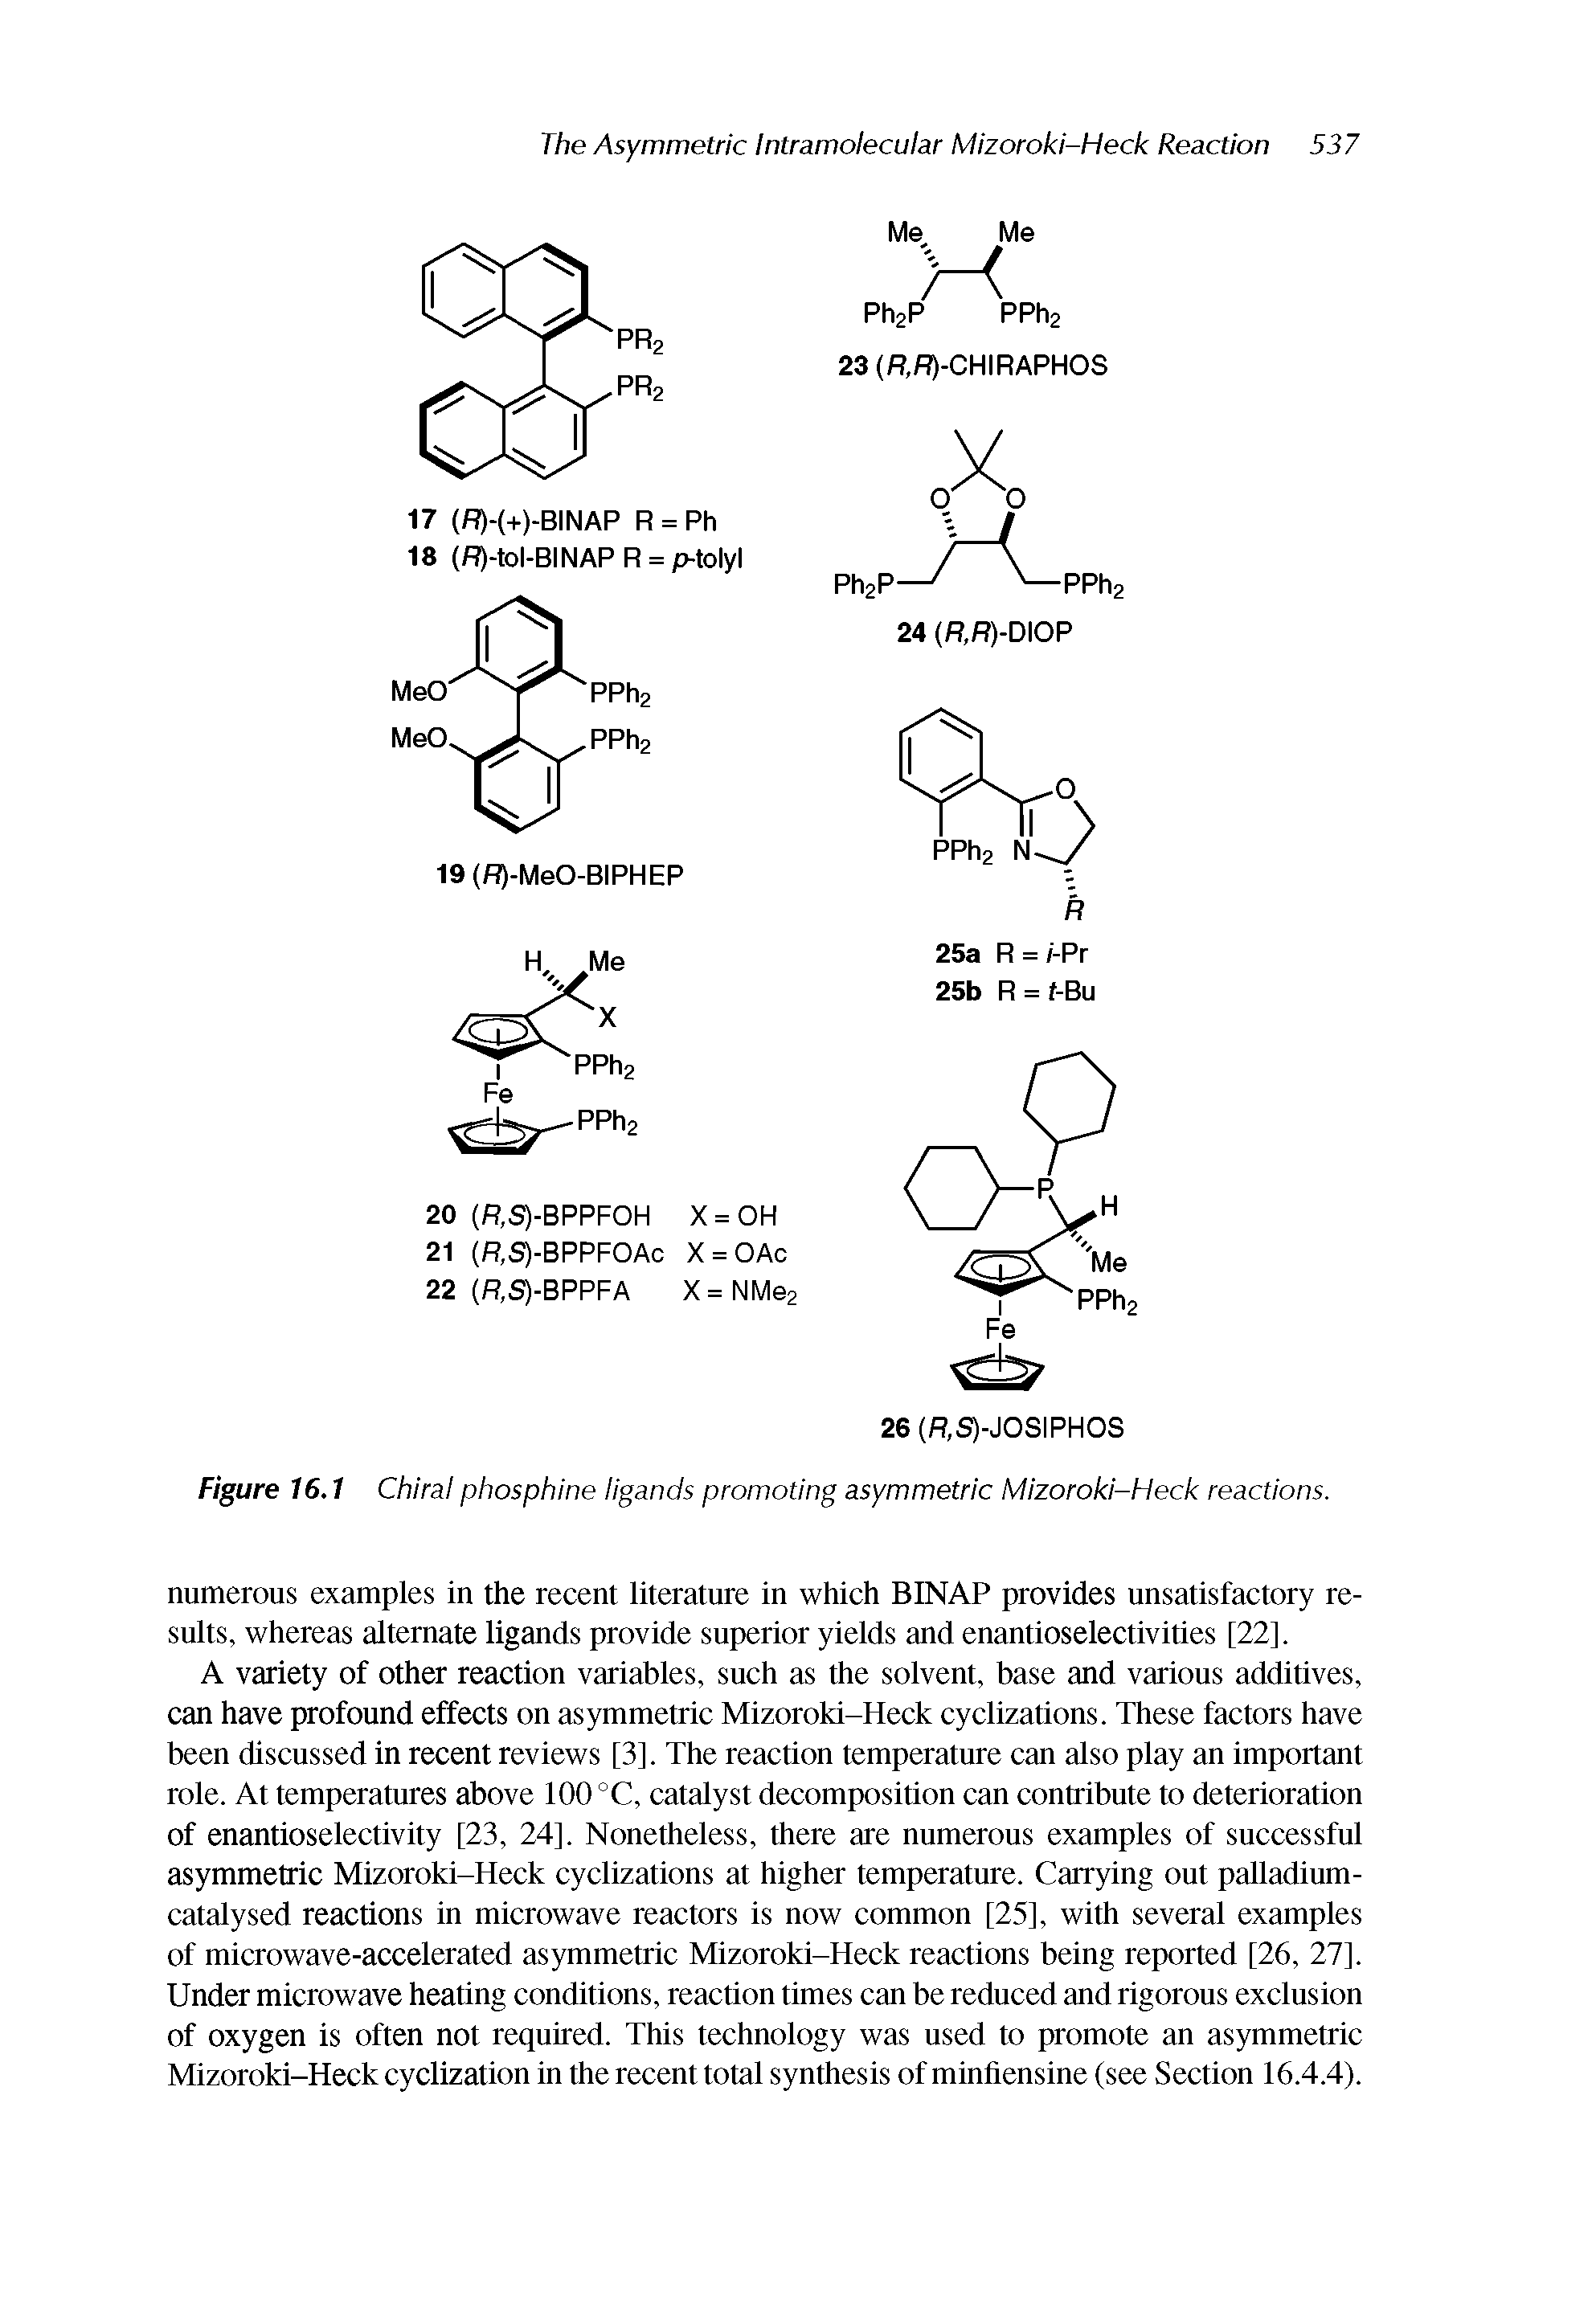 Figure 16.1 Chiral phosphine ligands promoting asymmetric Mizoroki-Heck reactions.